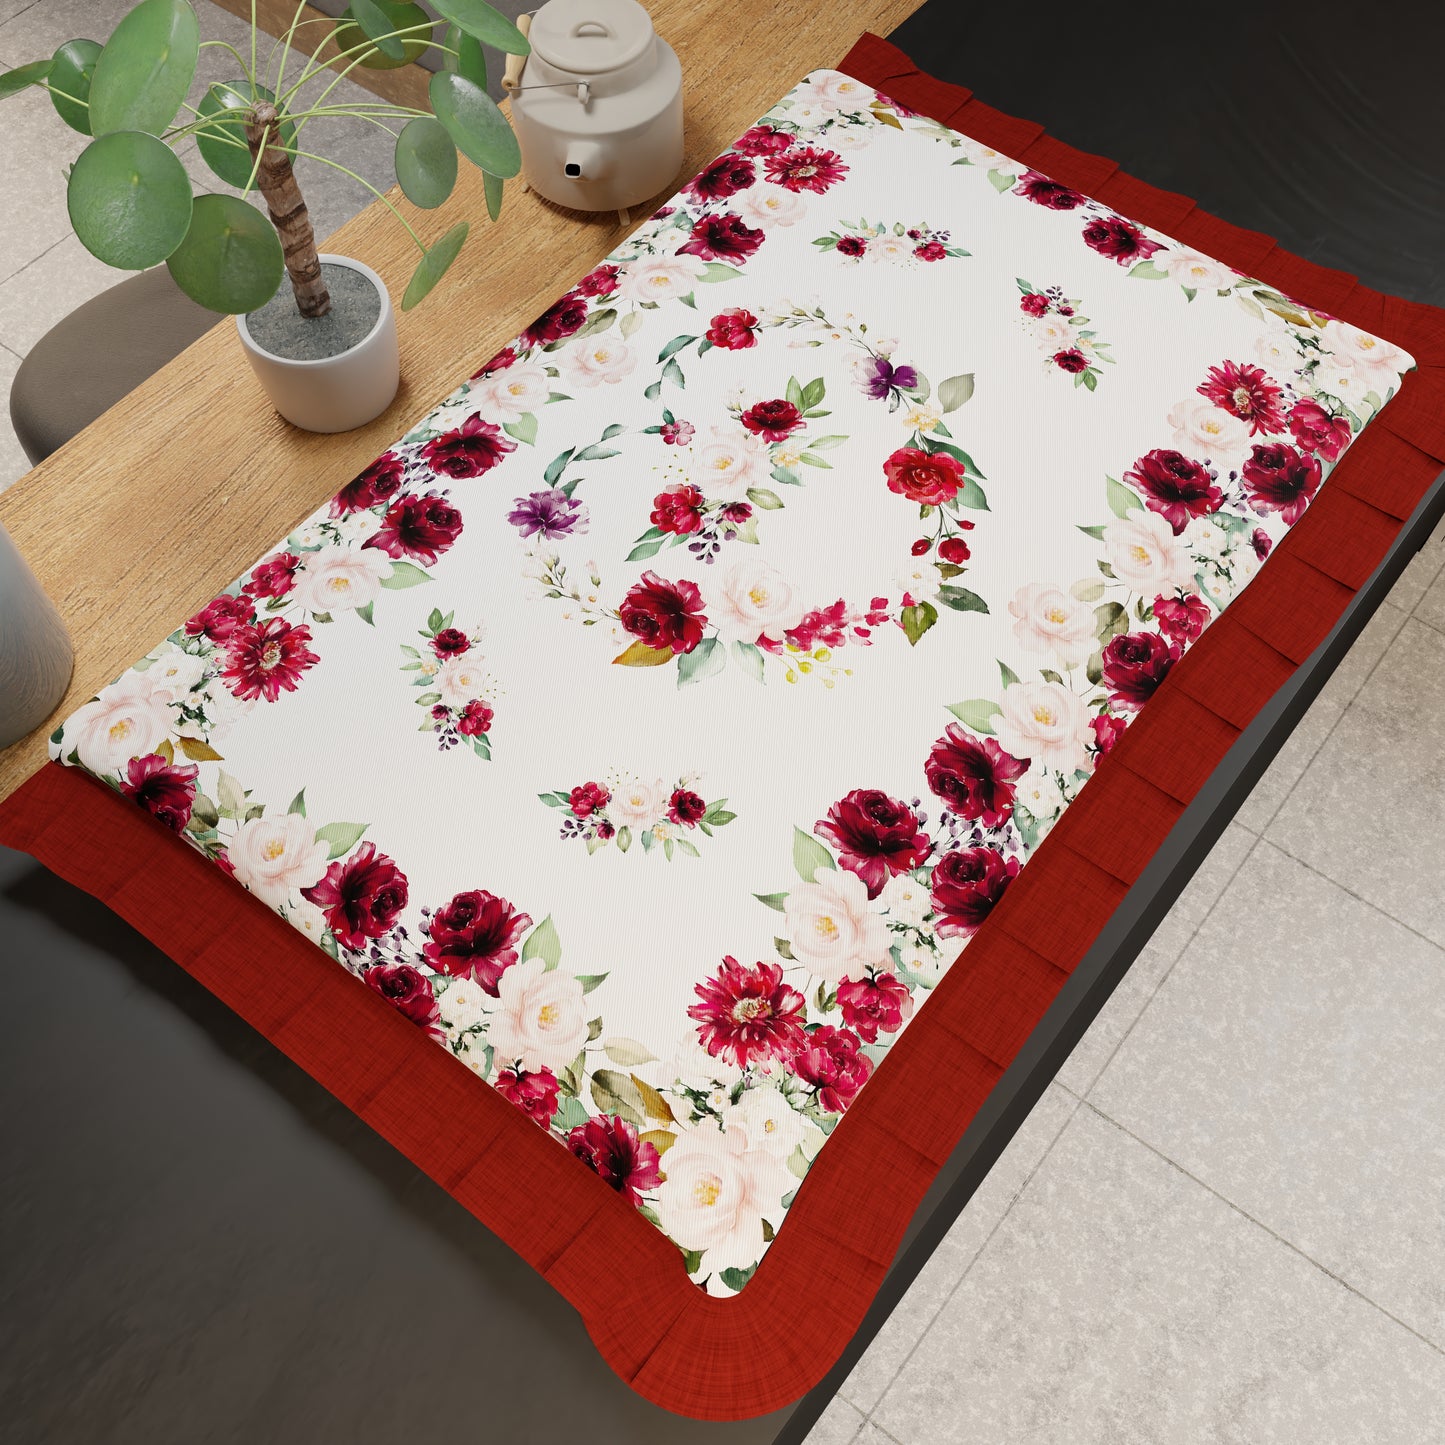 Kitchen stove cover in digital floral print-07 1pc 46x70cm